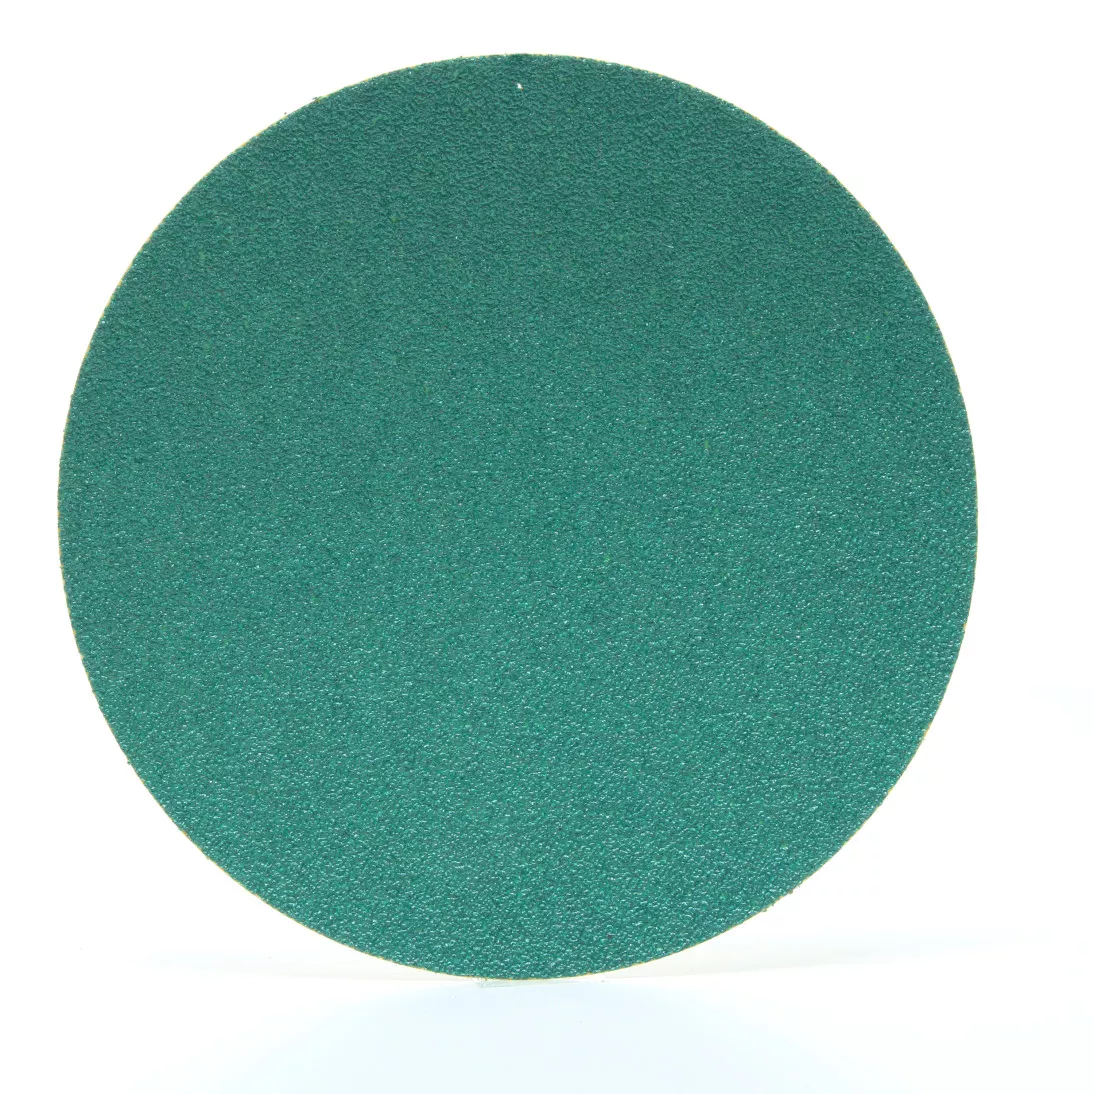 3M™ Green Corps™ Hookit™ Paper Abrasive Disc, 35434, 60 Grit, E weight,
7 in x 3/8 in, 50 discs per carton, 5 cartons per case